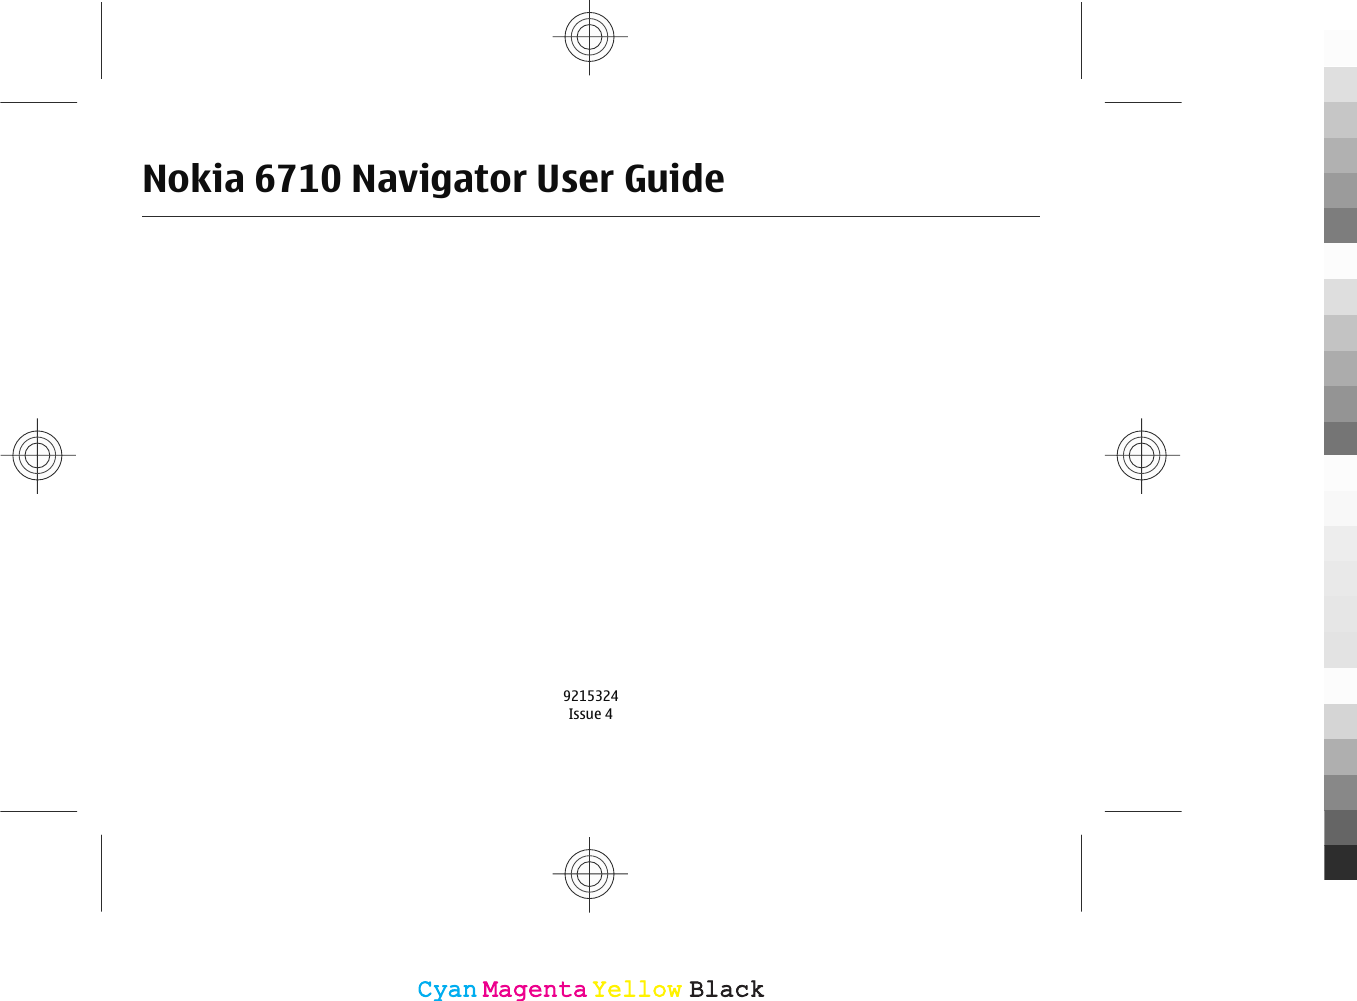 Nokia 6710 Navigator User Guide9215324Issue 4CyanCyanMagentaMagentaYellowYellowBlackBlack